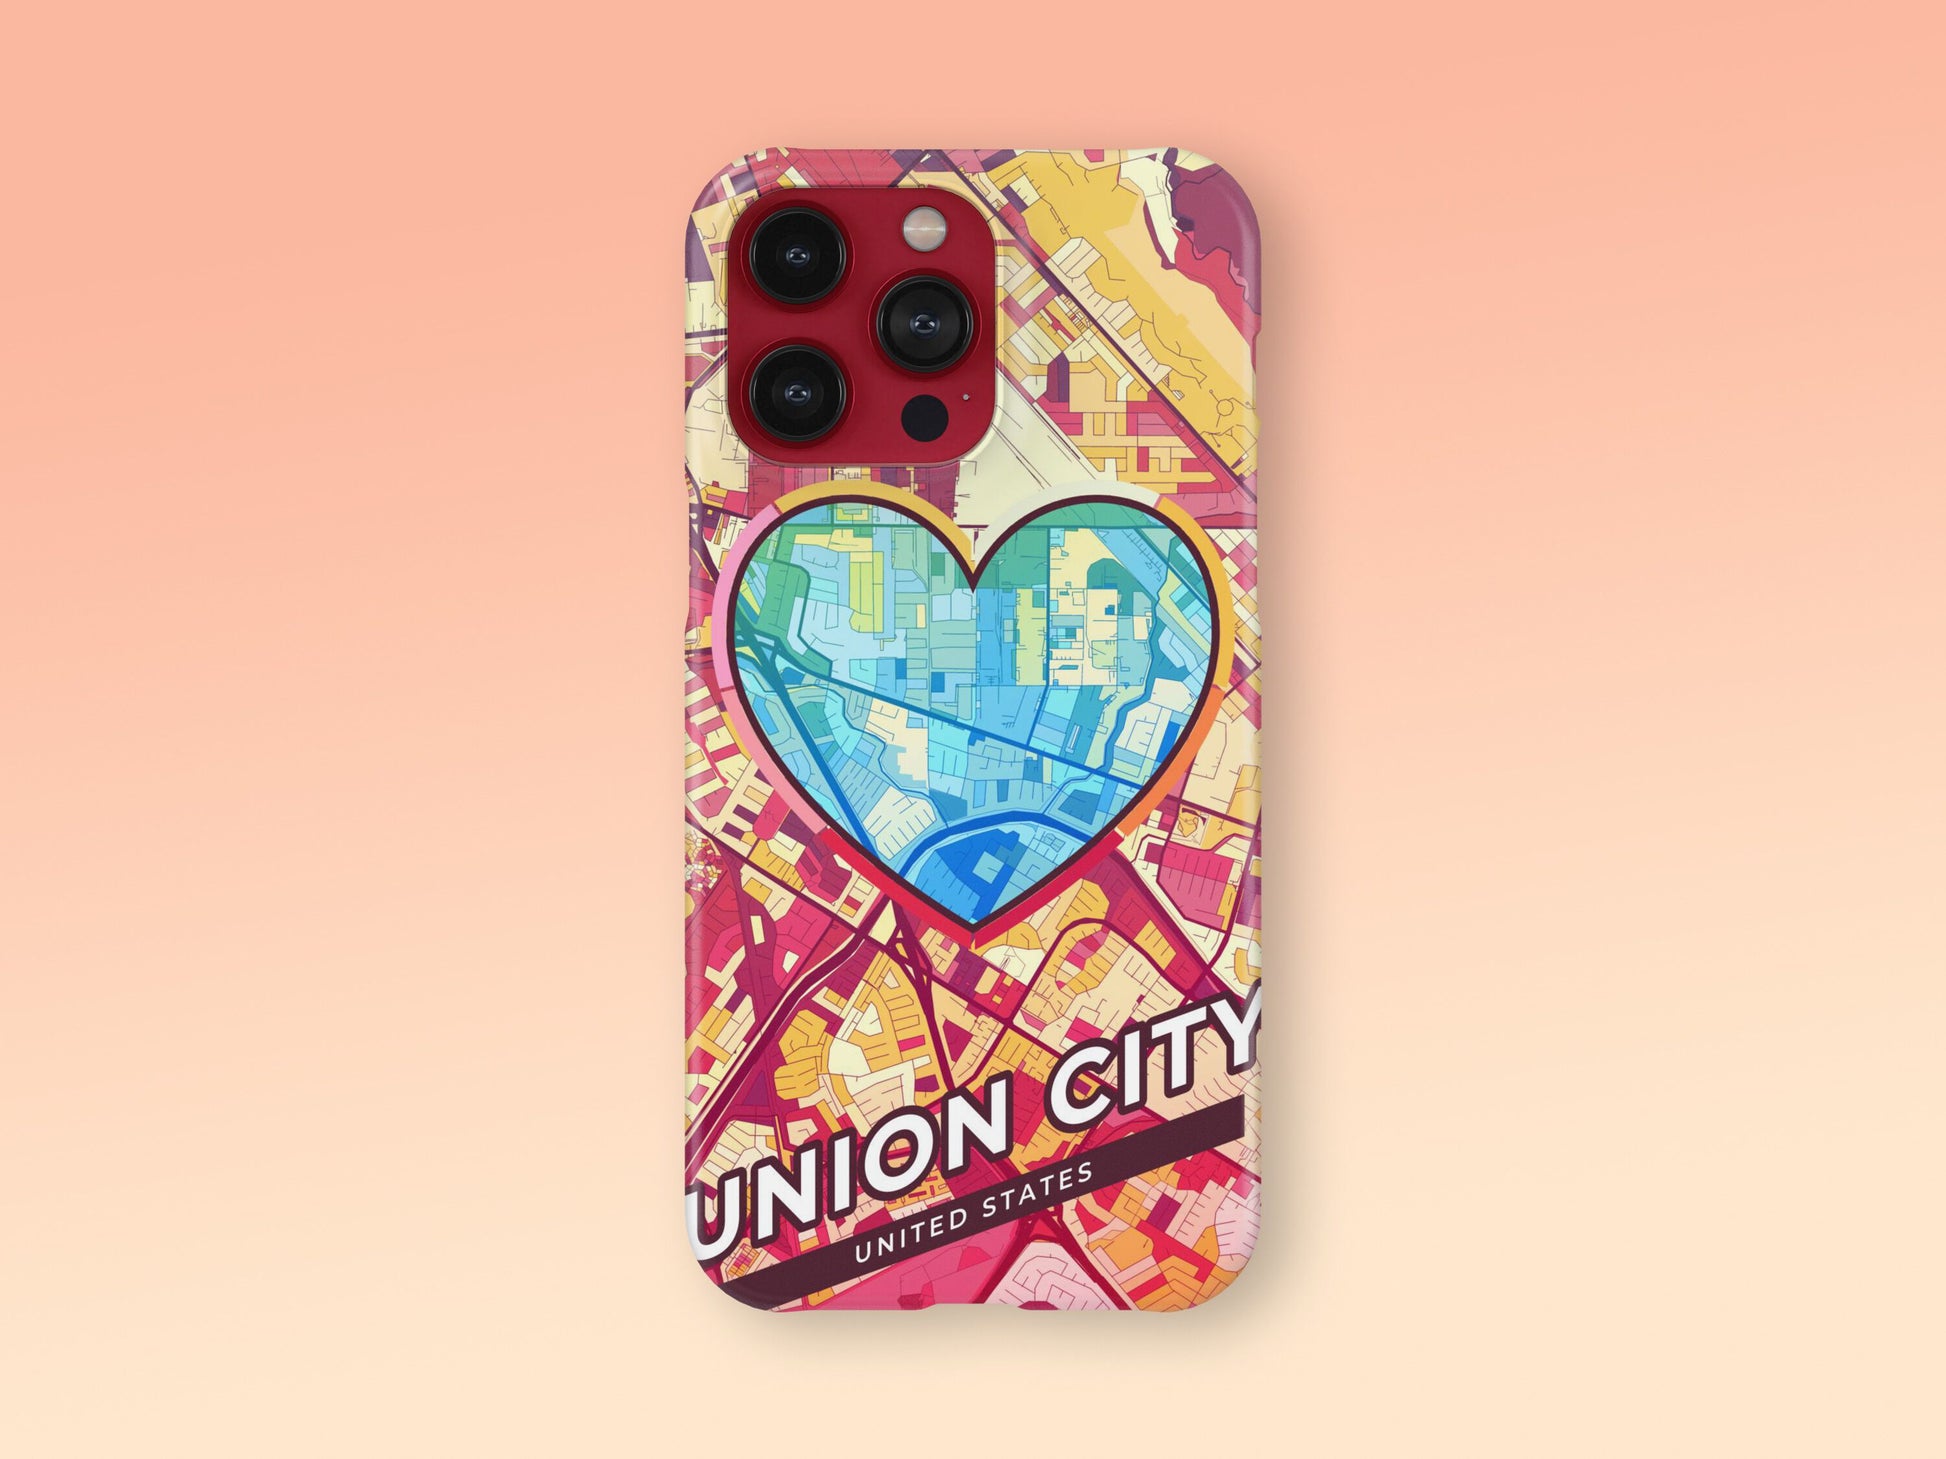 Union City California slim phone case with colorful icon 2